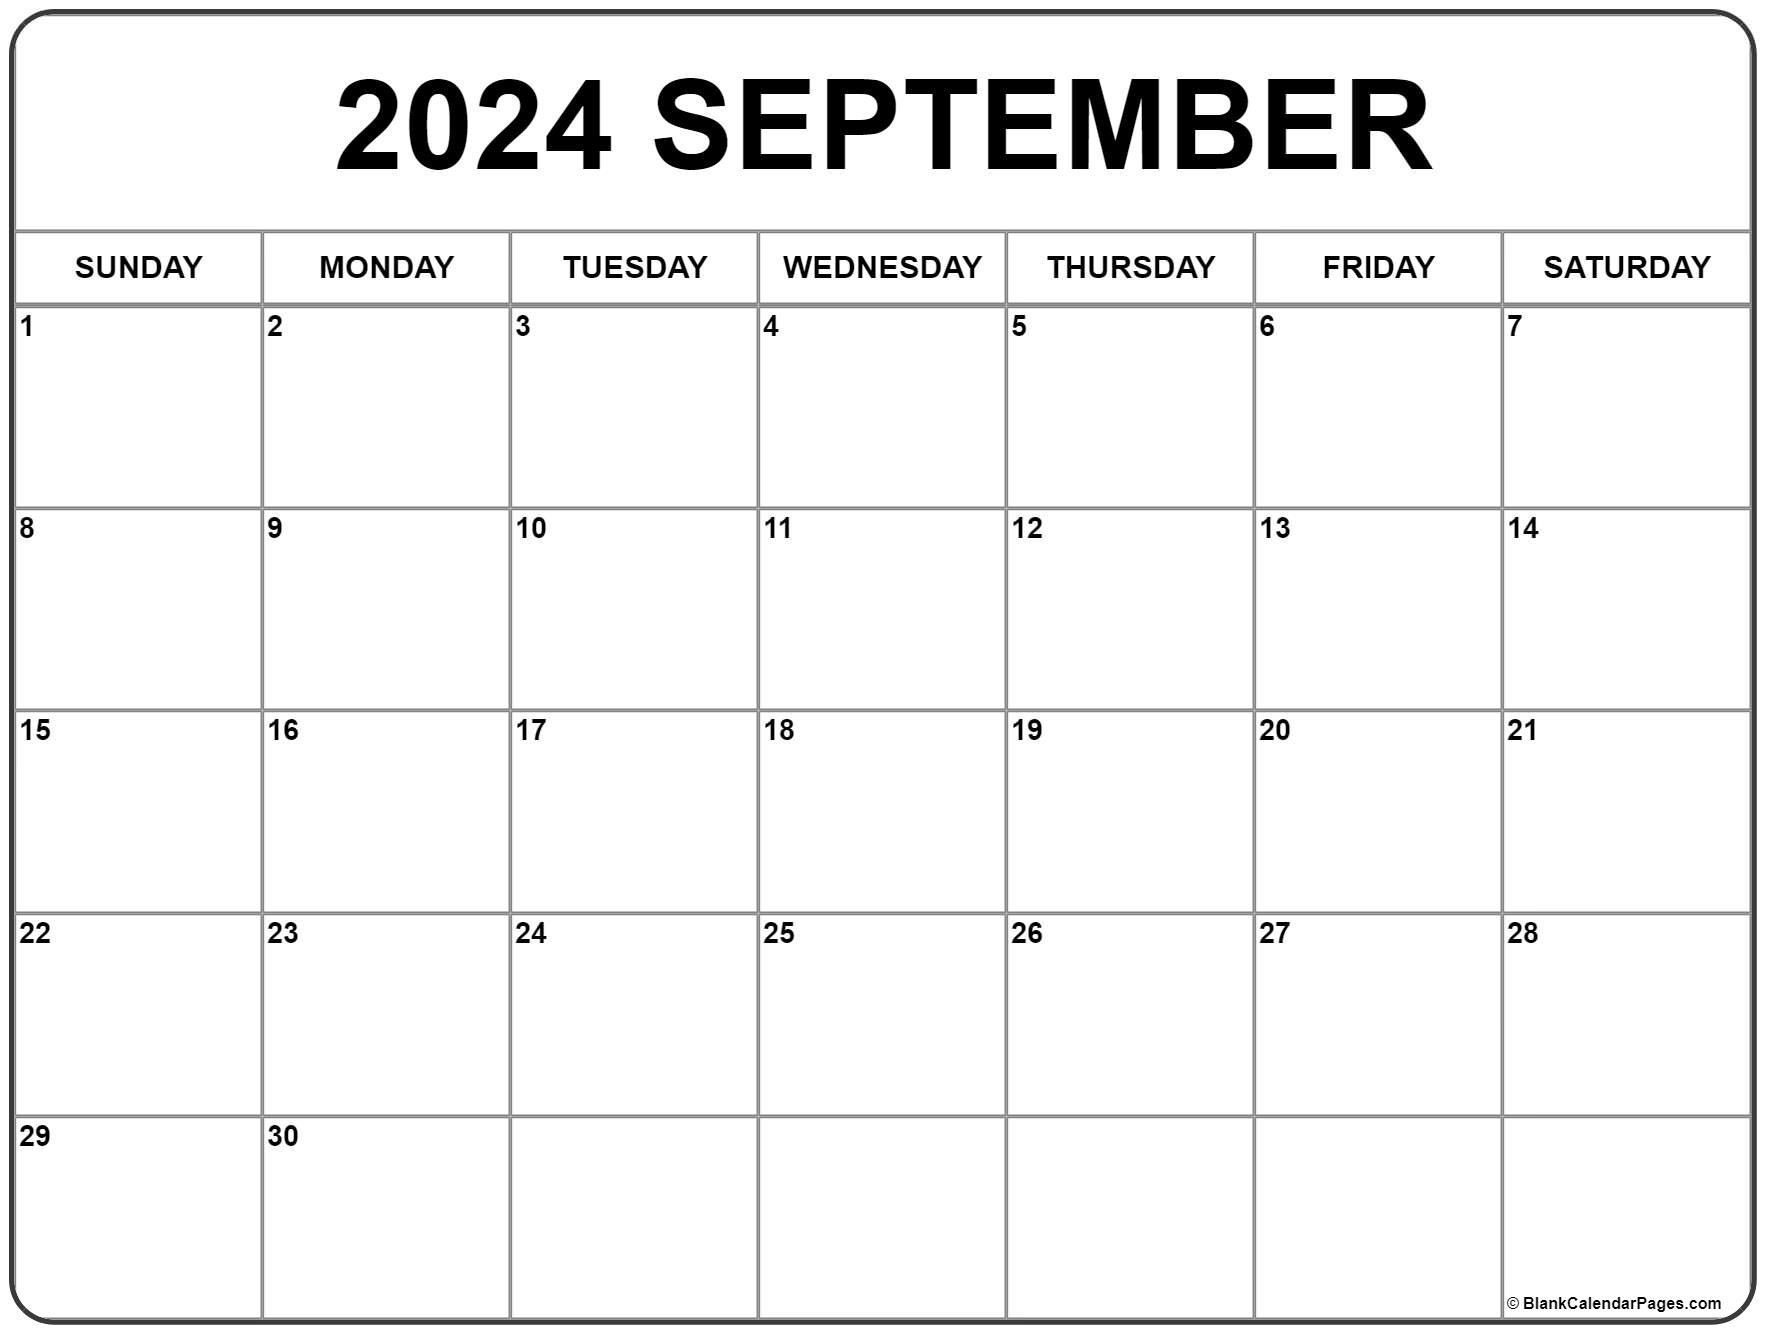 September 2024 Calendar | Free Printable Calendar regarding Free Printable Blank Sept 2024 Calendar